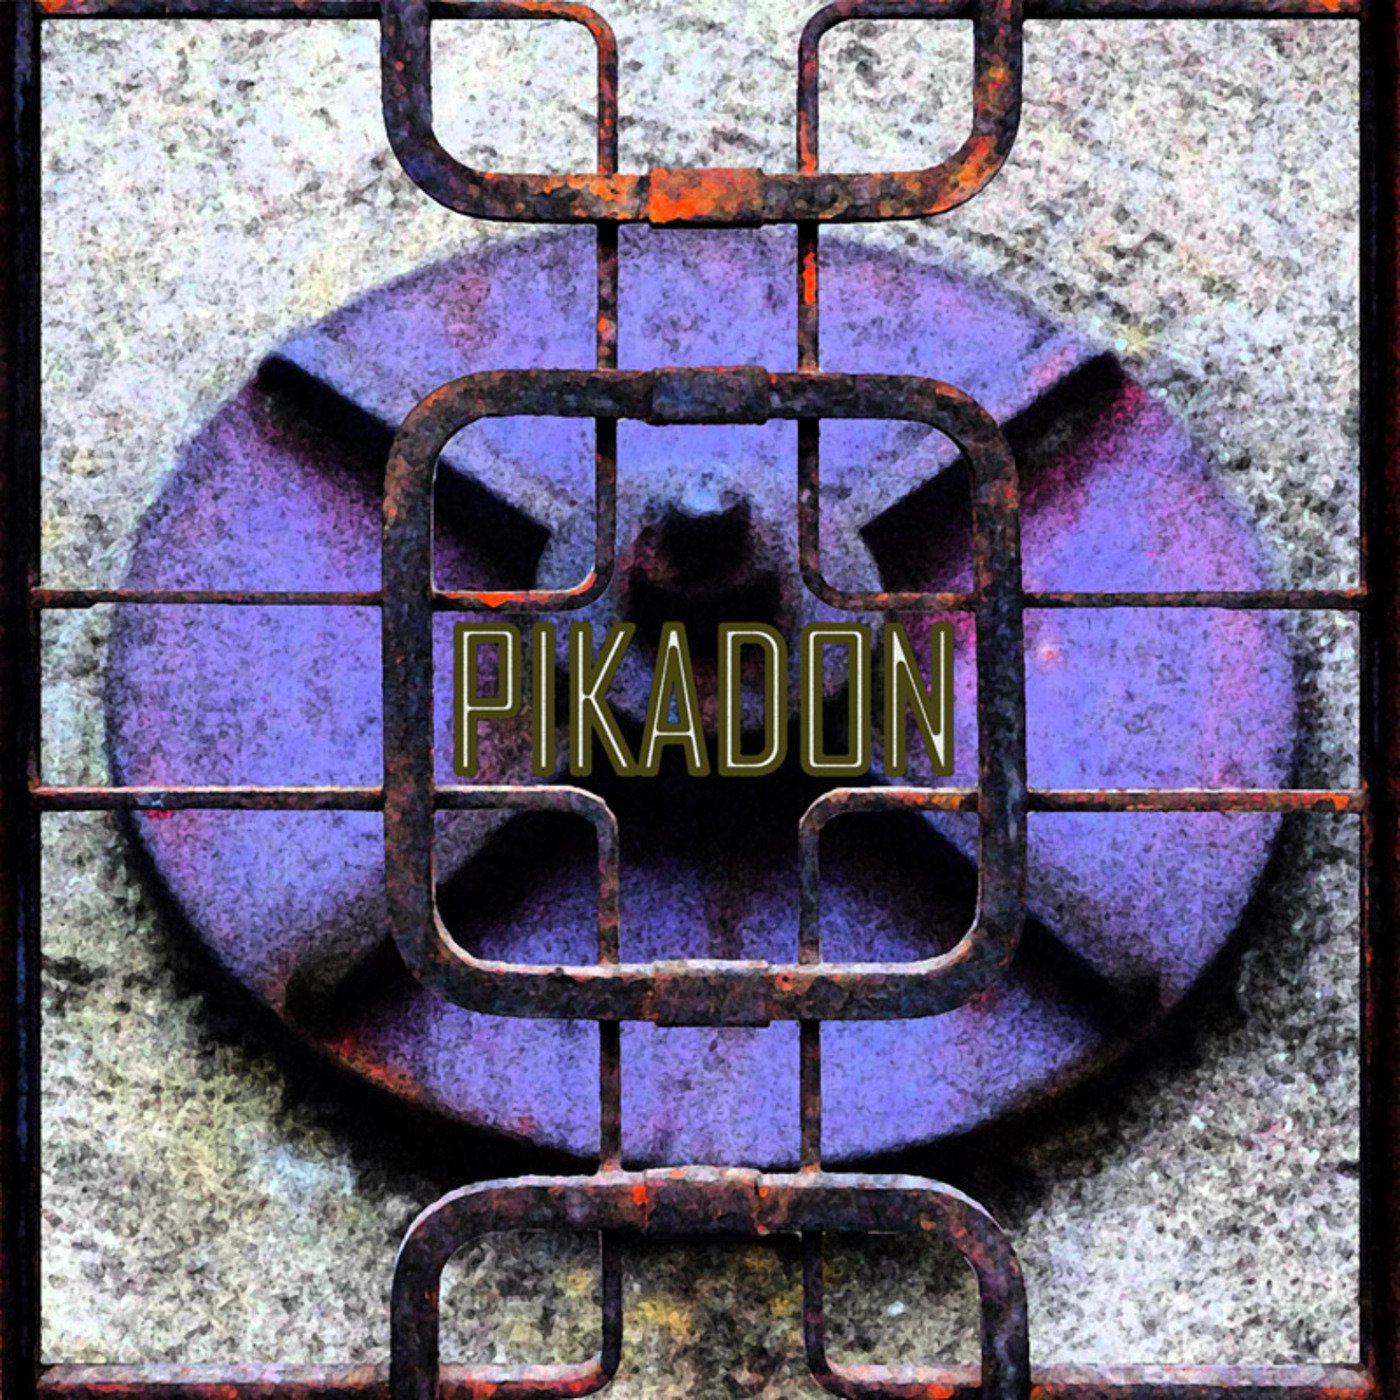 09 - Pikadon - Me Degenerate Me (Jordi Heras Fauque Remix)